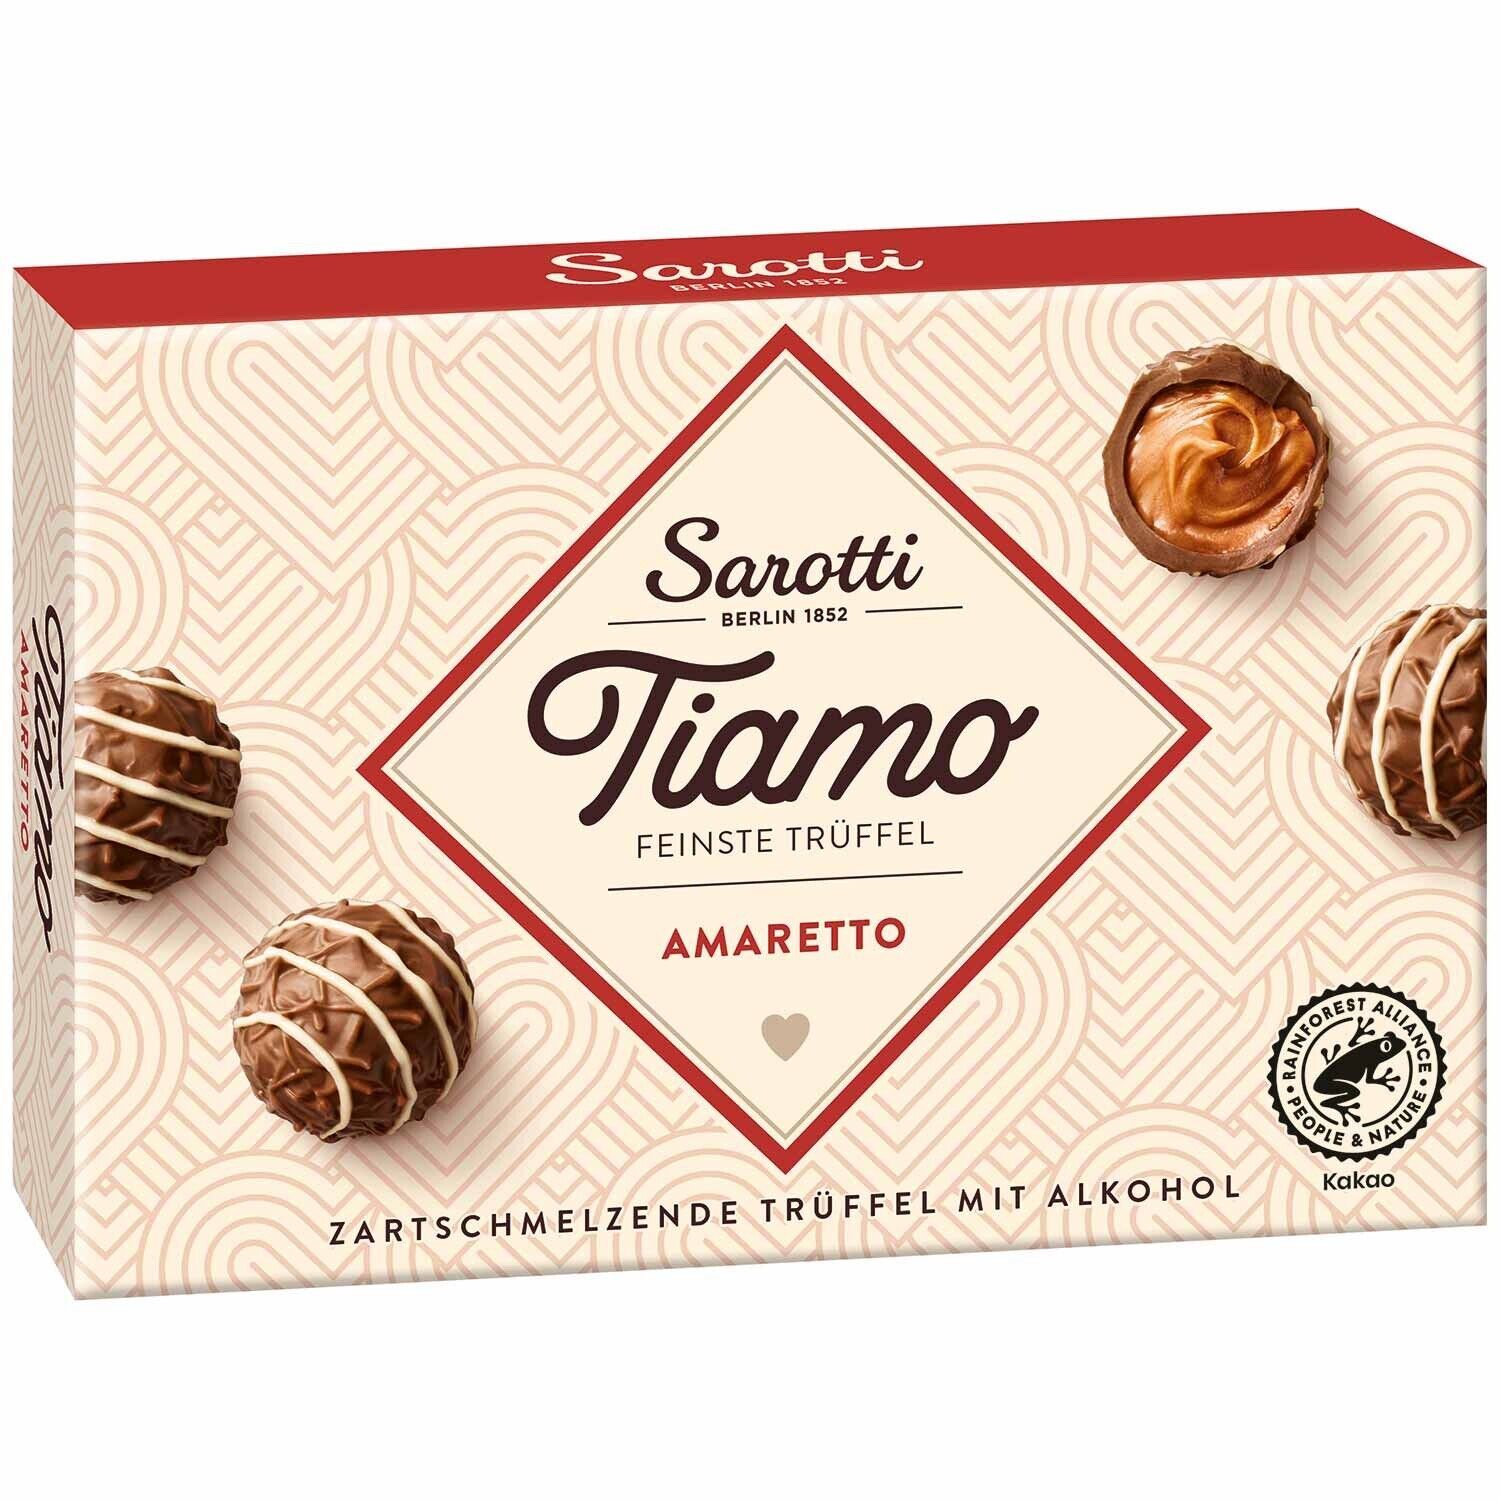 Primary image for Sarotti TIAMO chocolate truffles: AMARETTO 125g/100g FREE SHIP